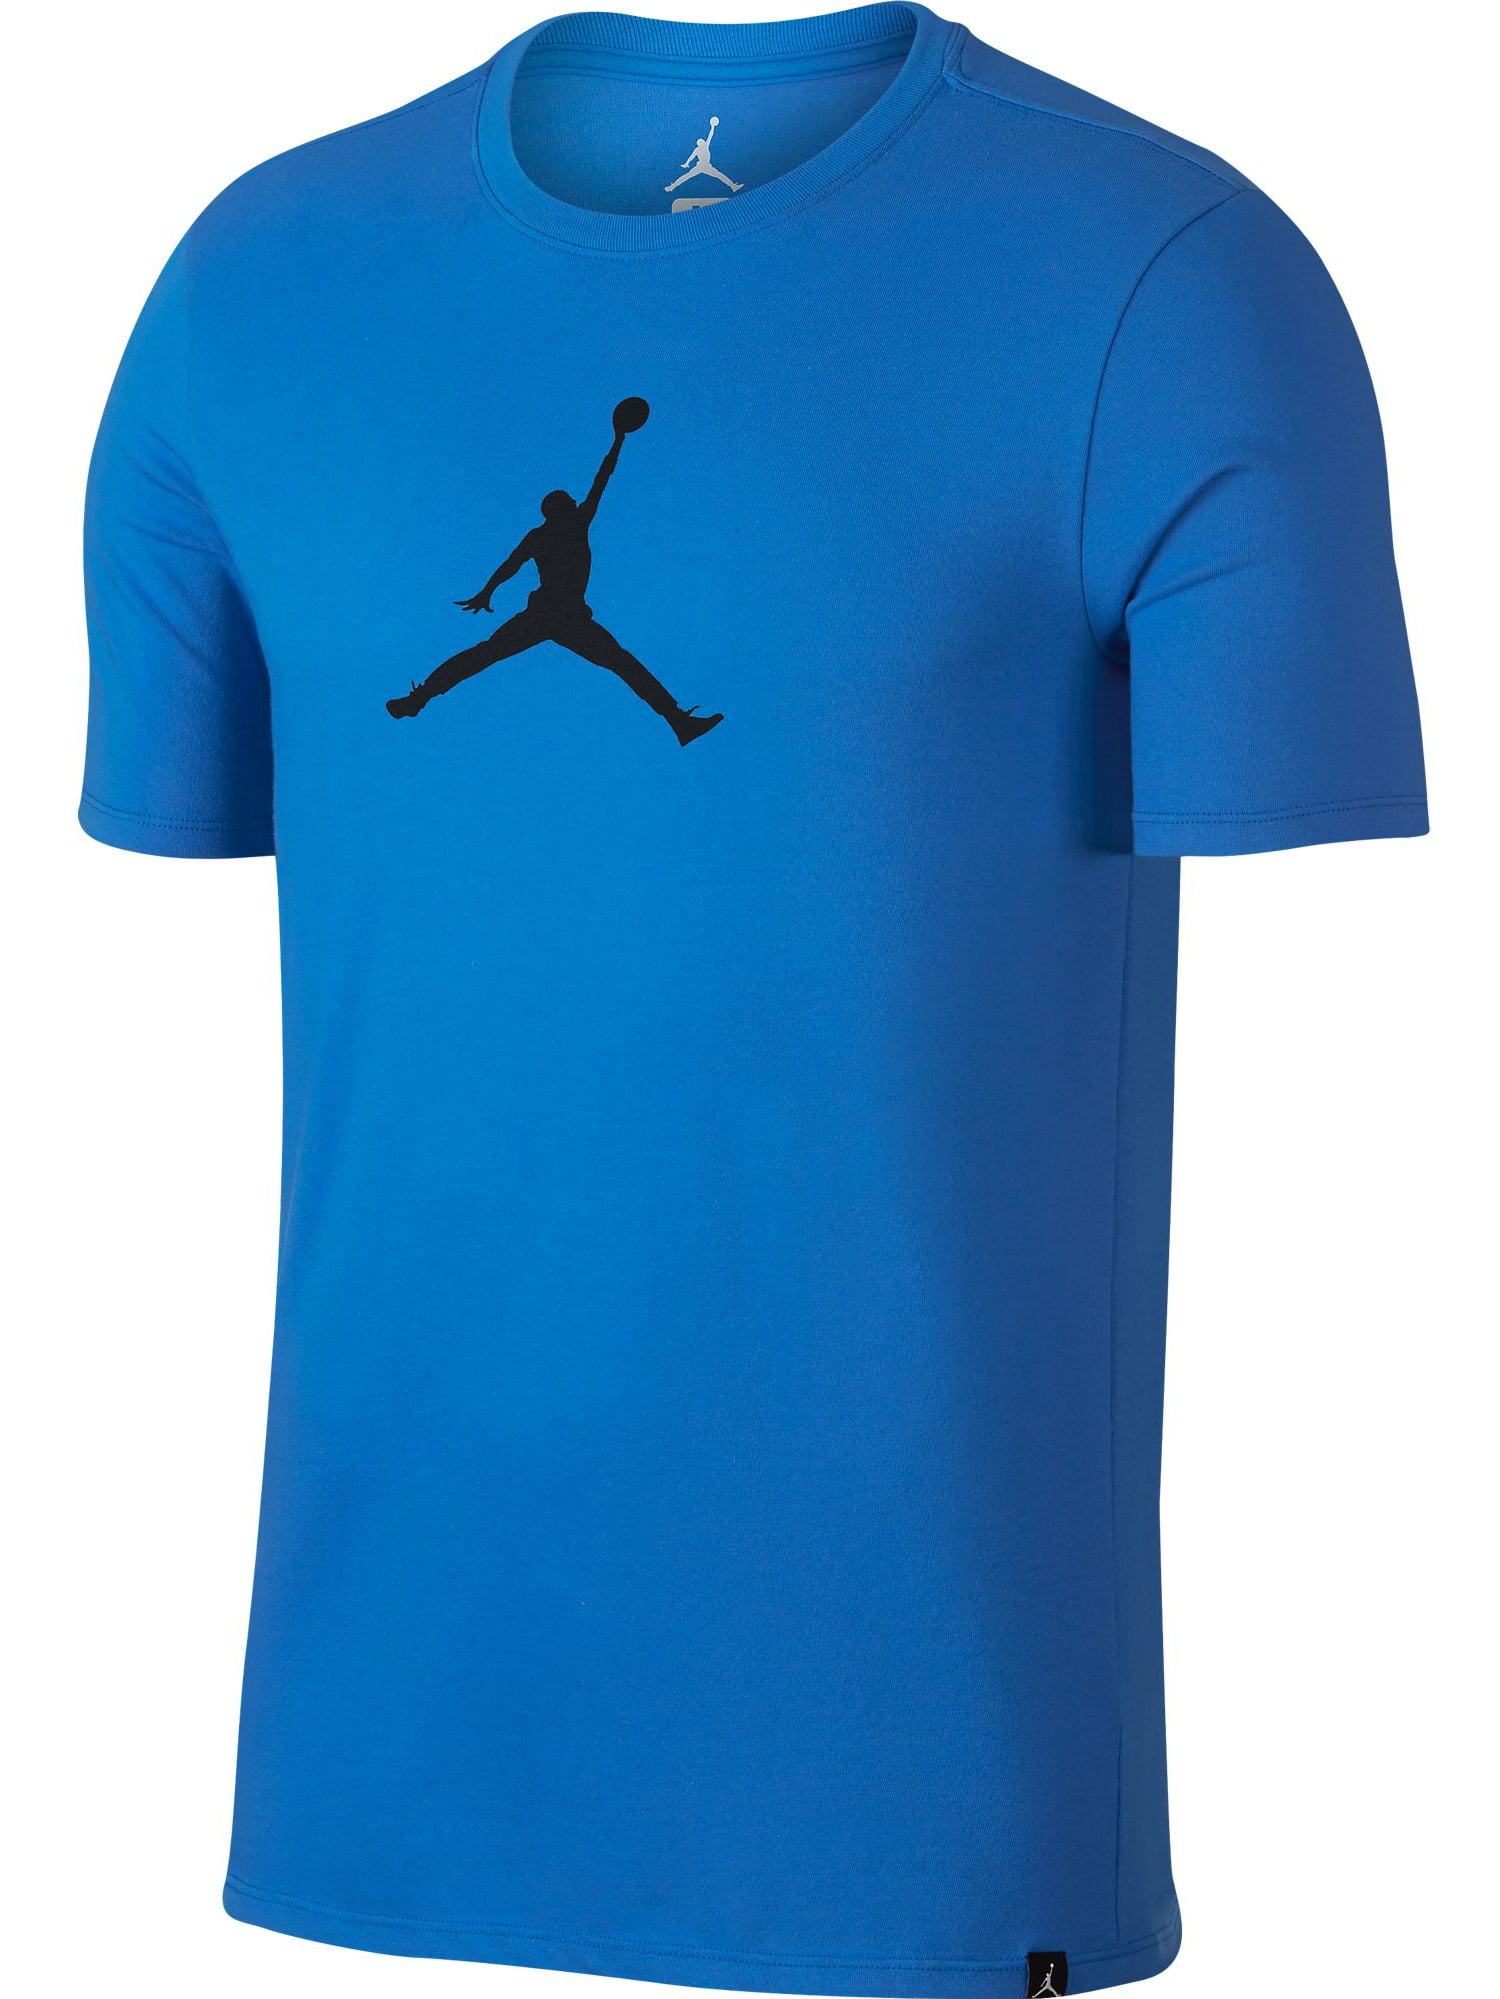 Jordan Jumpman 23/7 Men's Athletic Casual T-Shirt Blue/Black 925602-481 ...